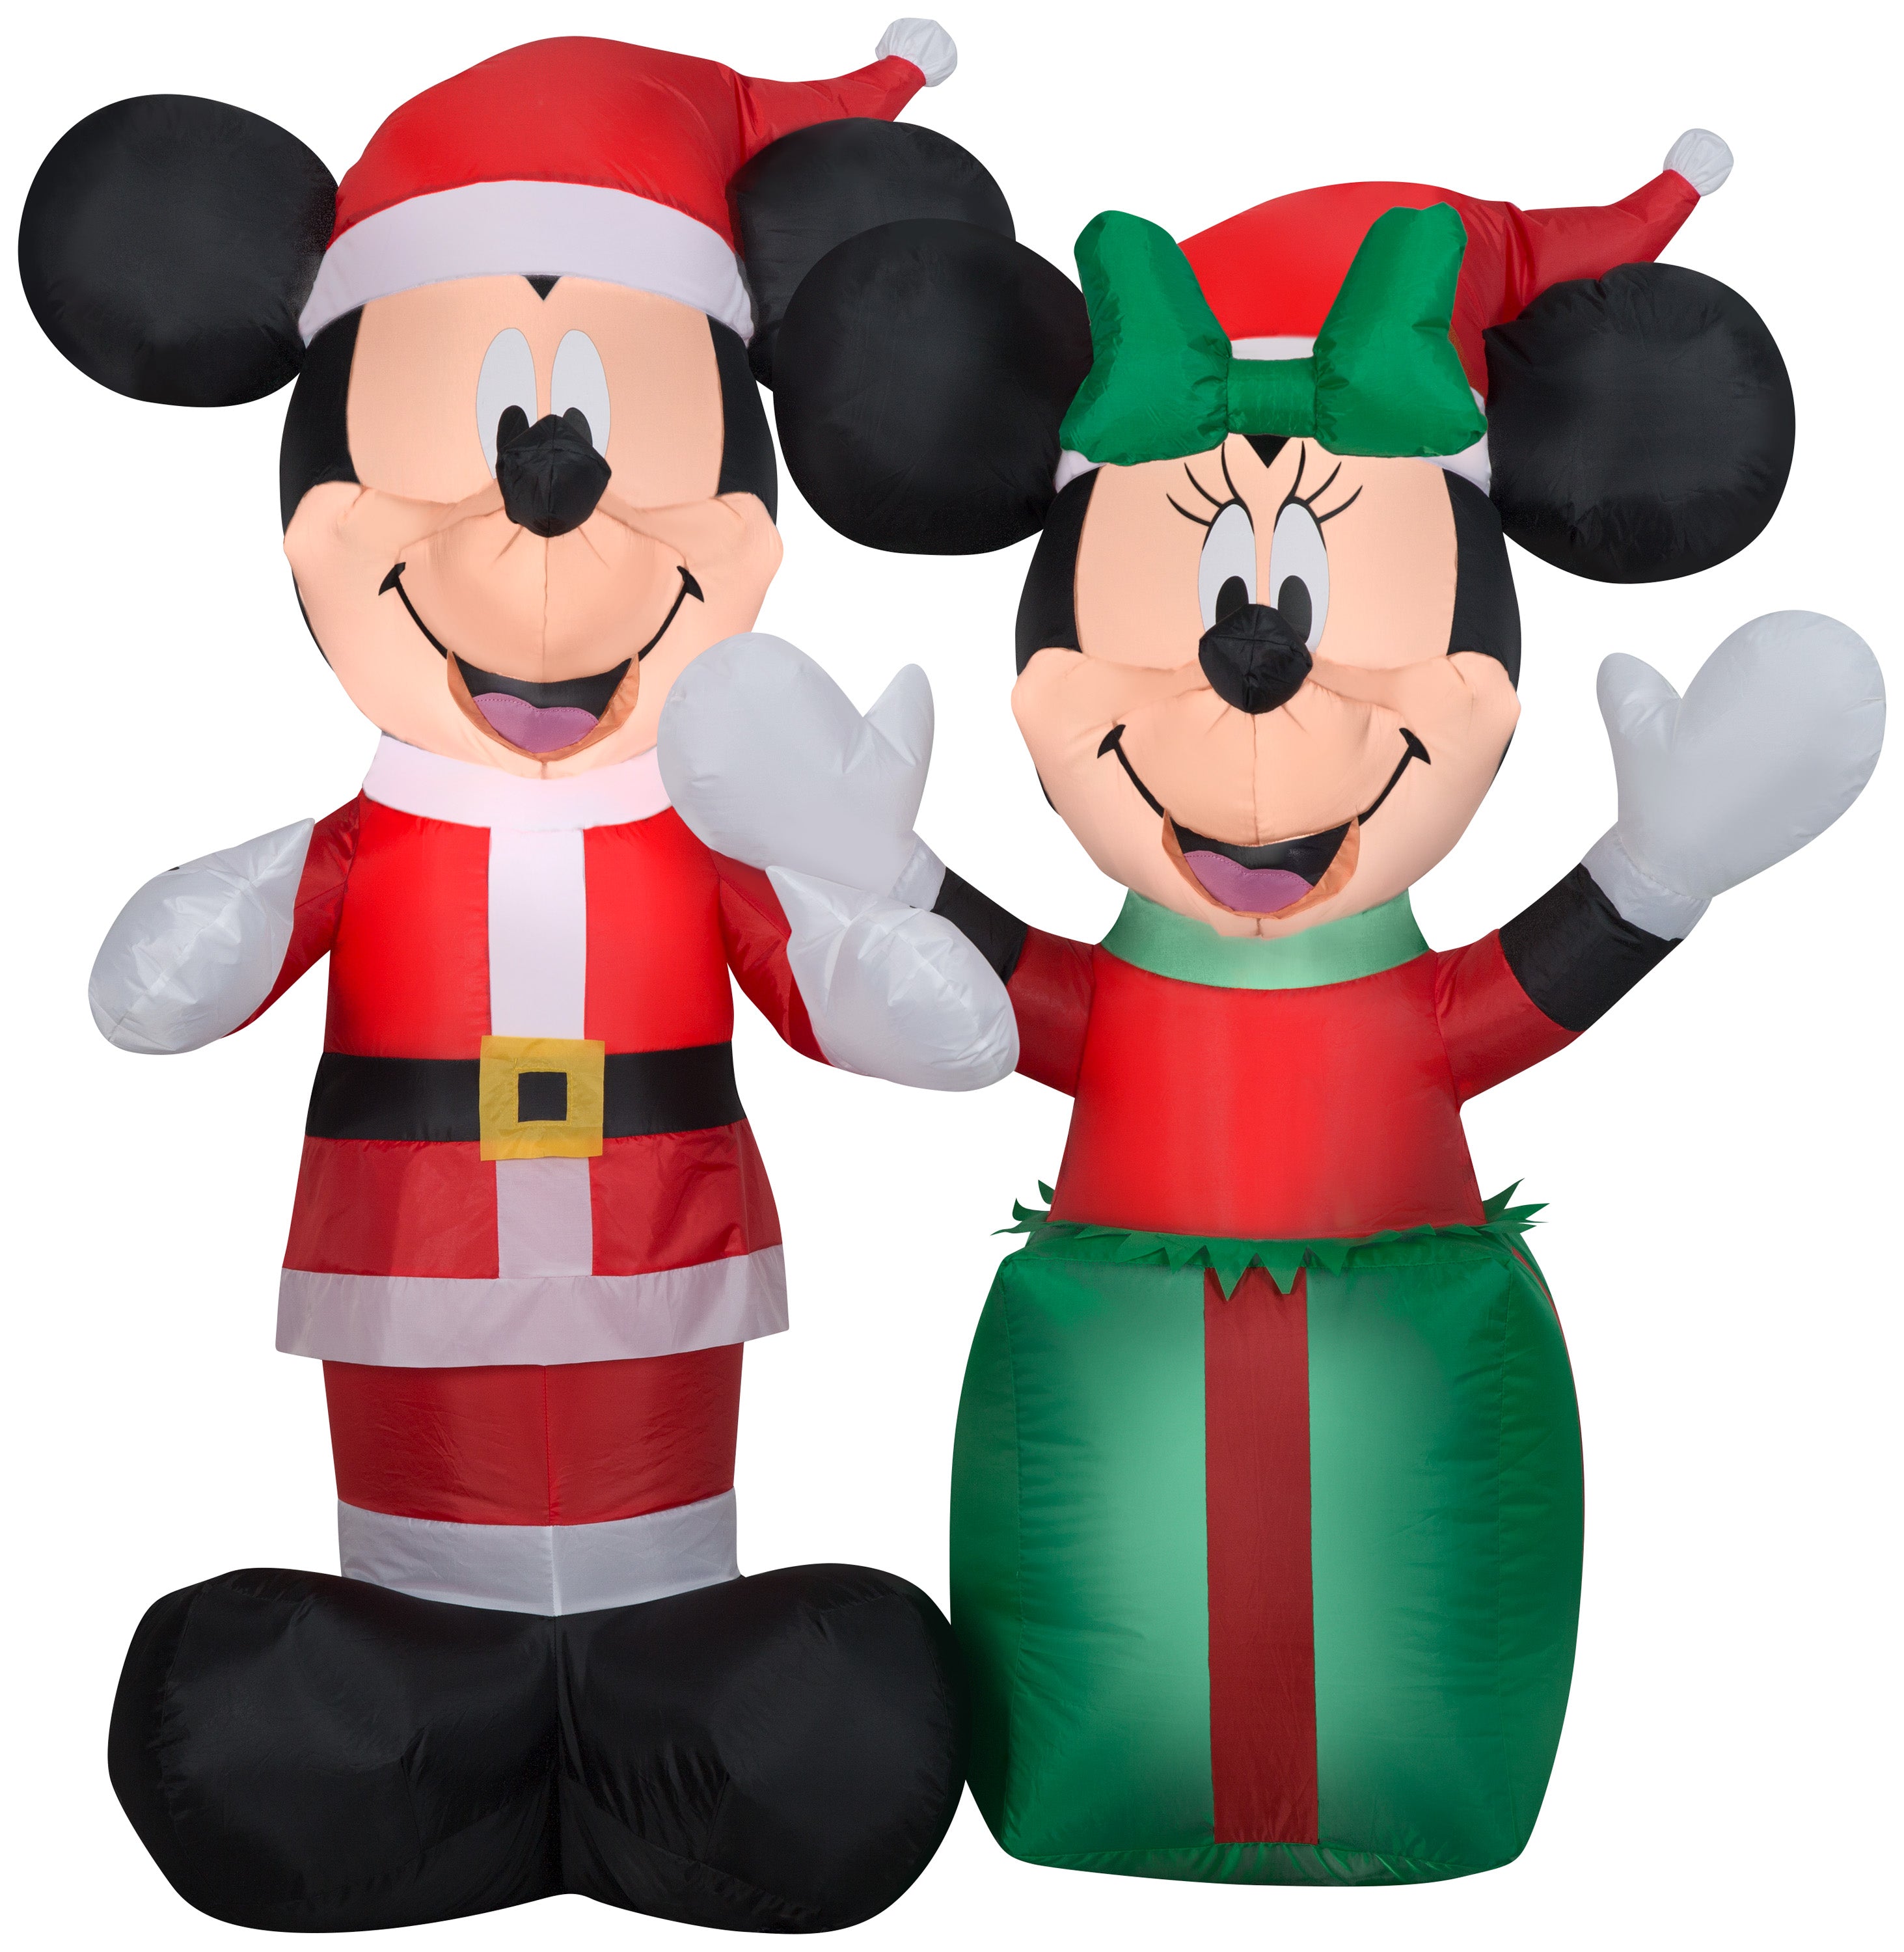 Gemmy Christmas Airblown Inflatable Santa Mickey and Minnie Scene Disney, 4 ft Tall